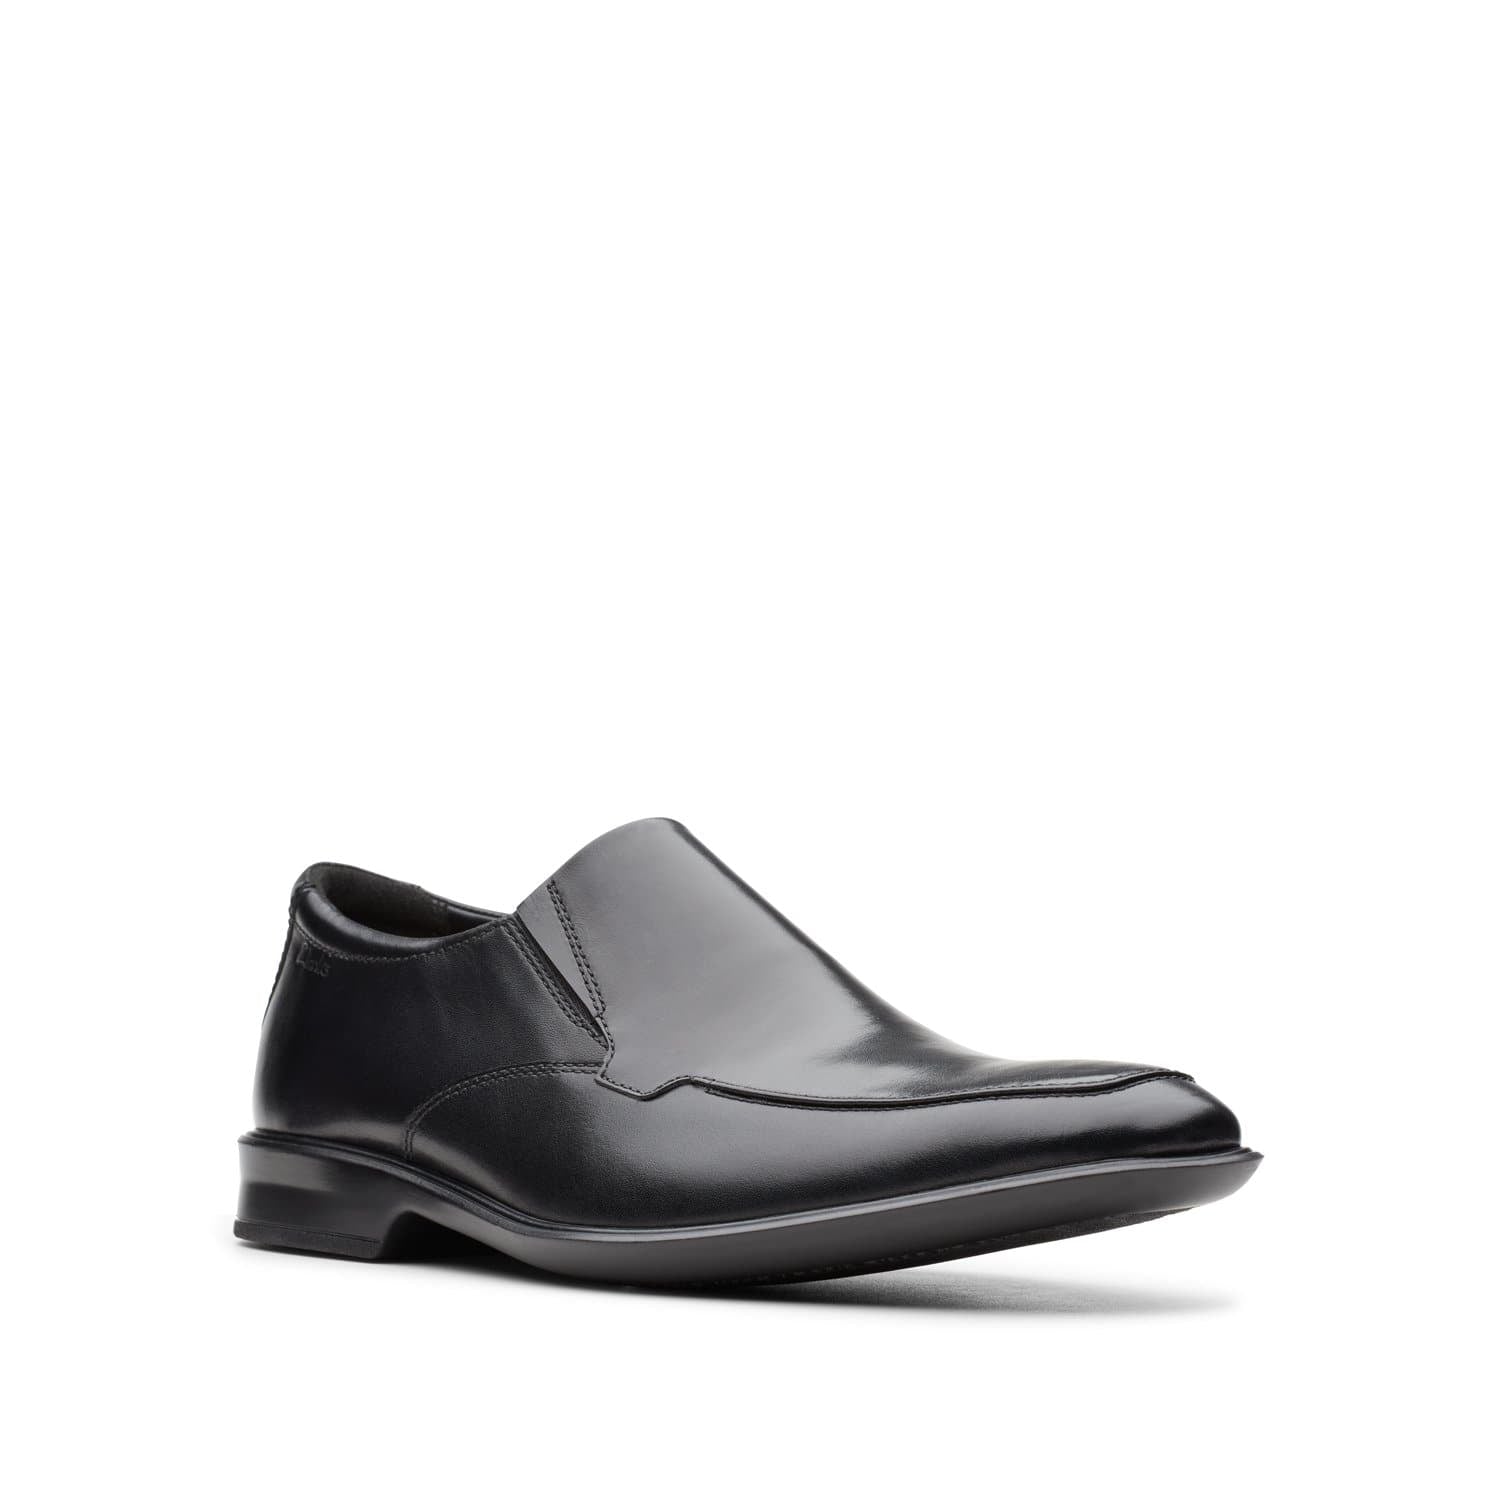 Clarks-Bensley-Step-Men's-Shoes-Black-Leather-26147686